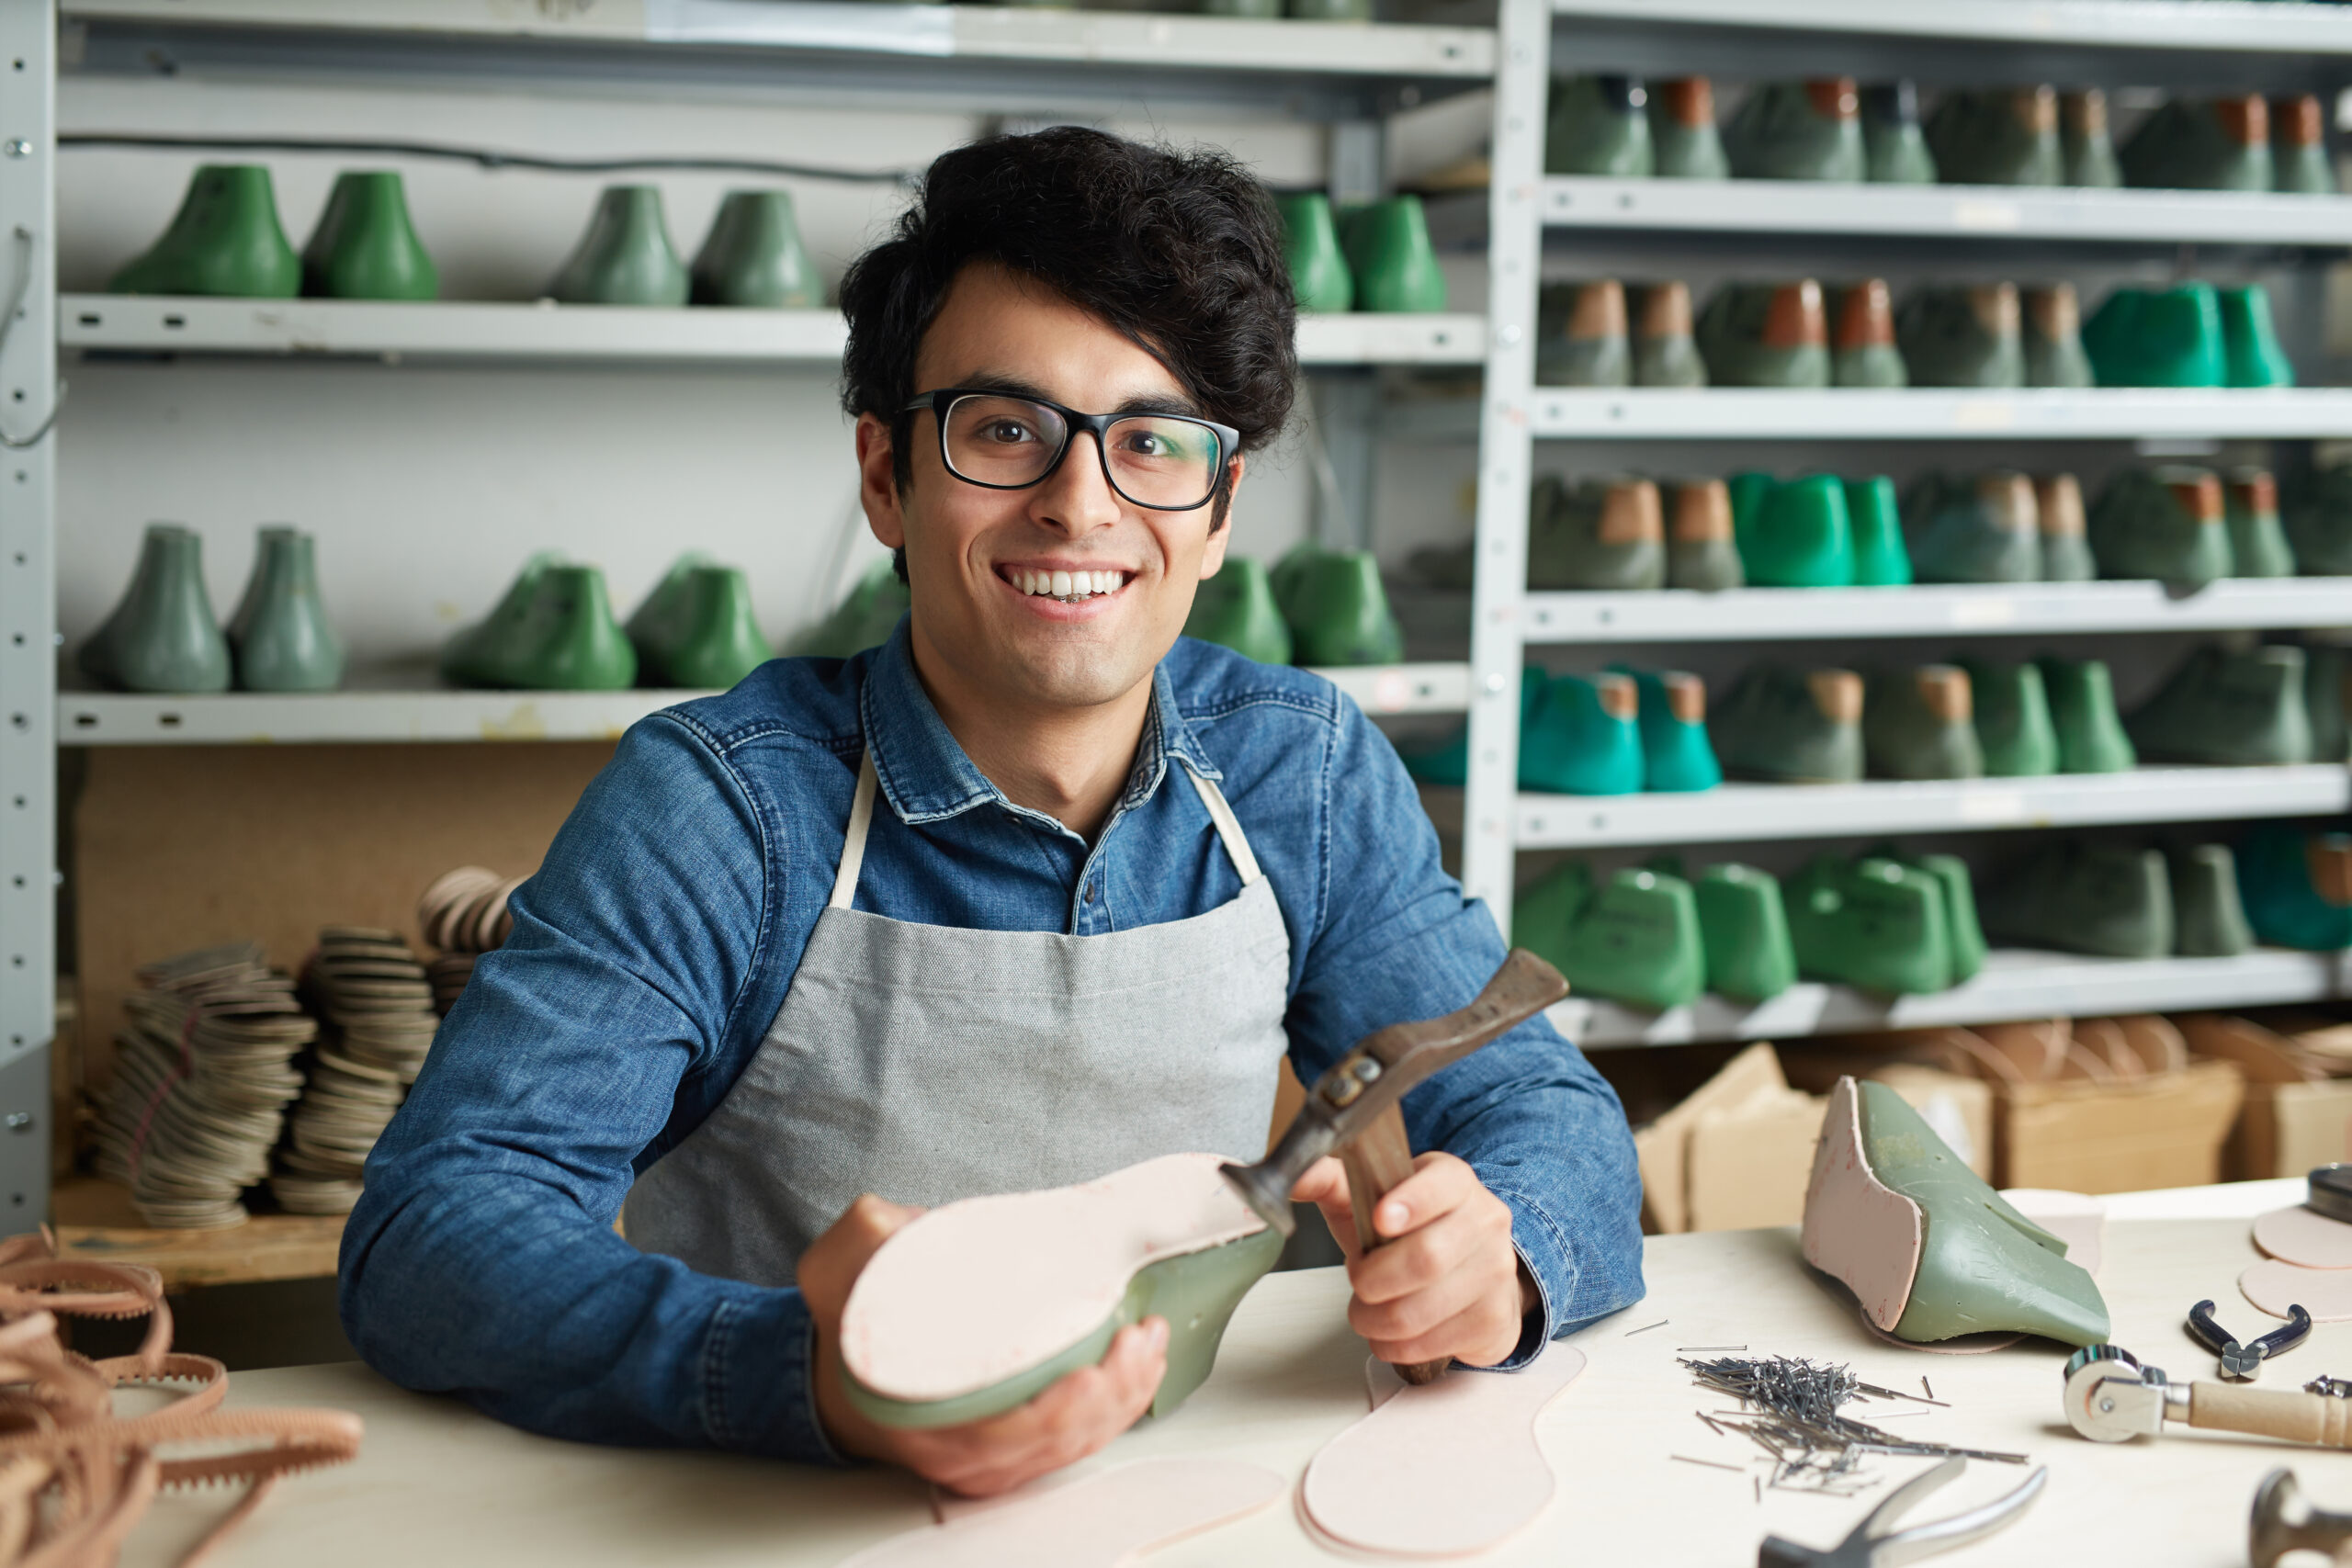 Self-employed shoemaker or repairman looking at camera during work